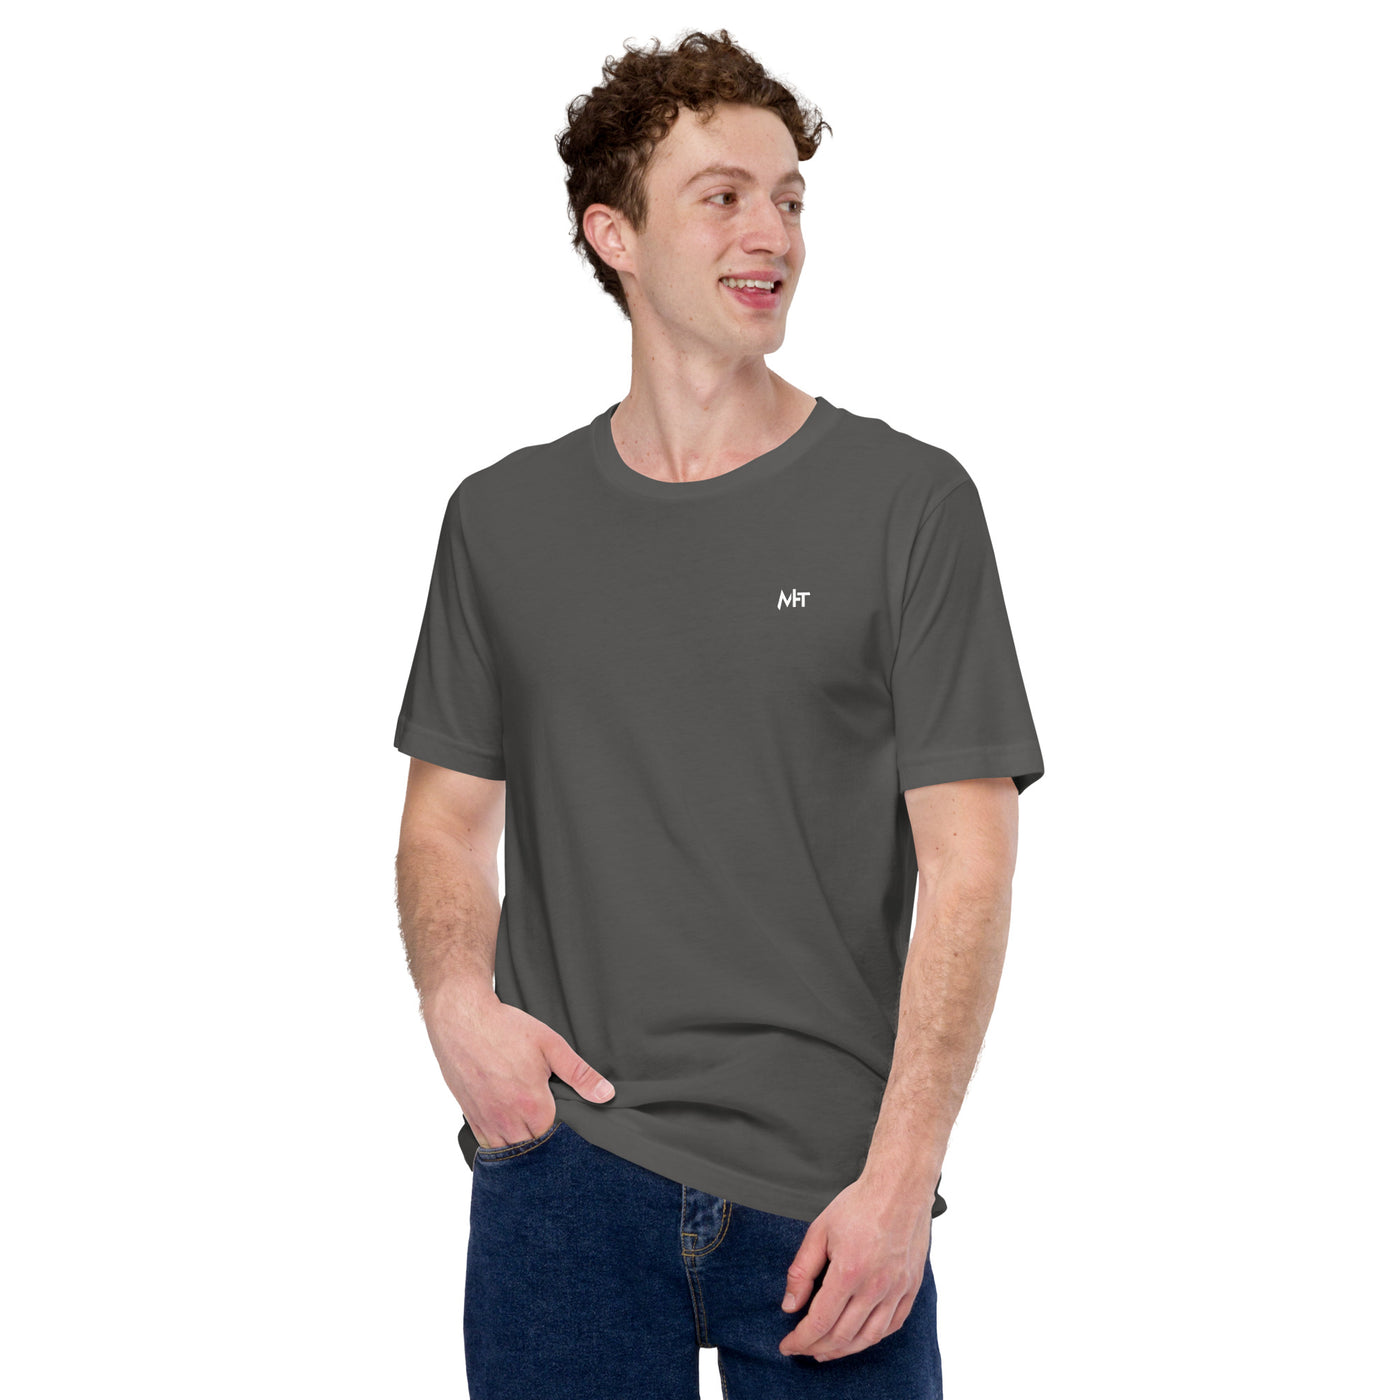 Code is like Humor - Unisex t-shirt  ( Back Print )